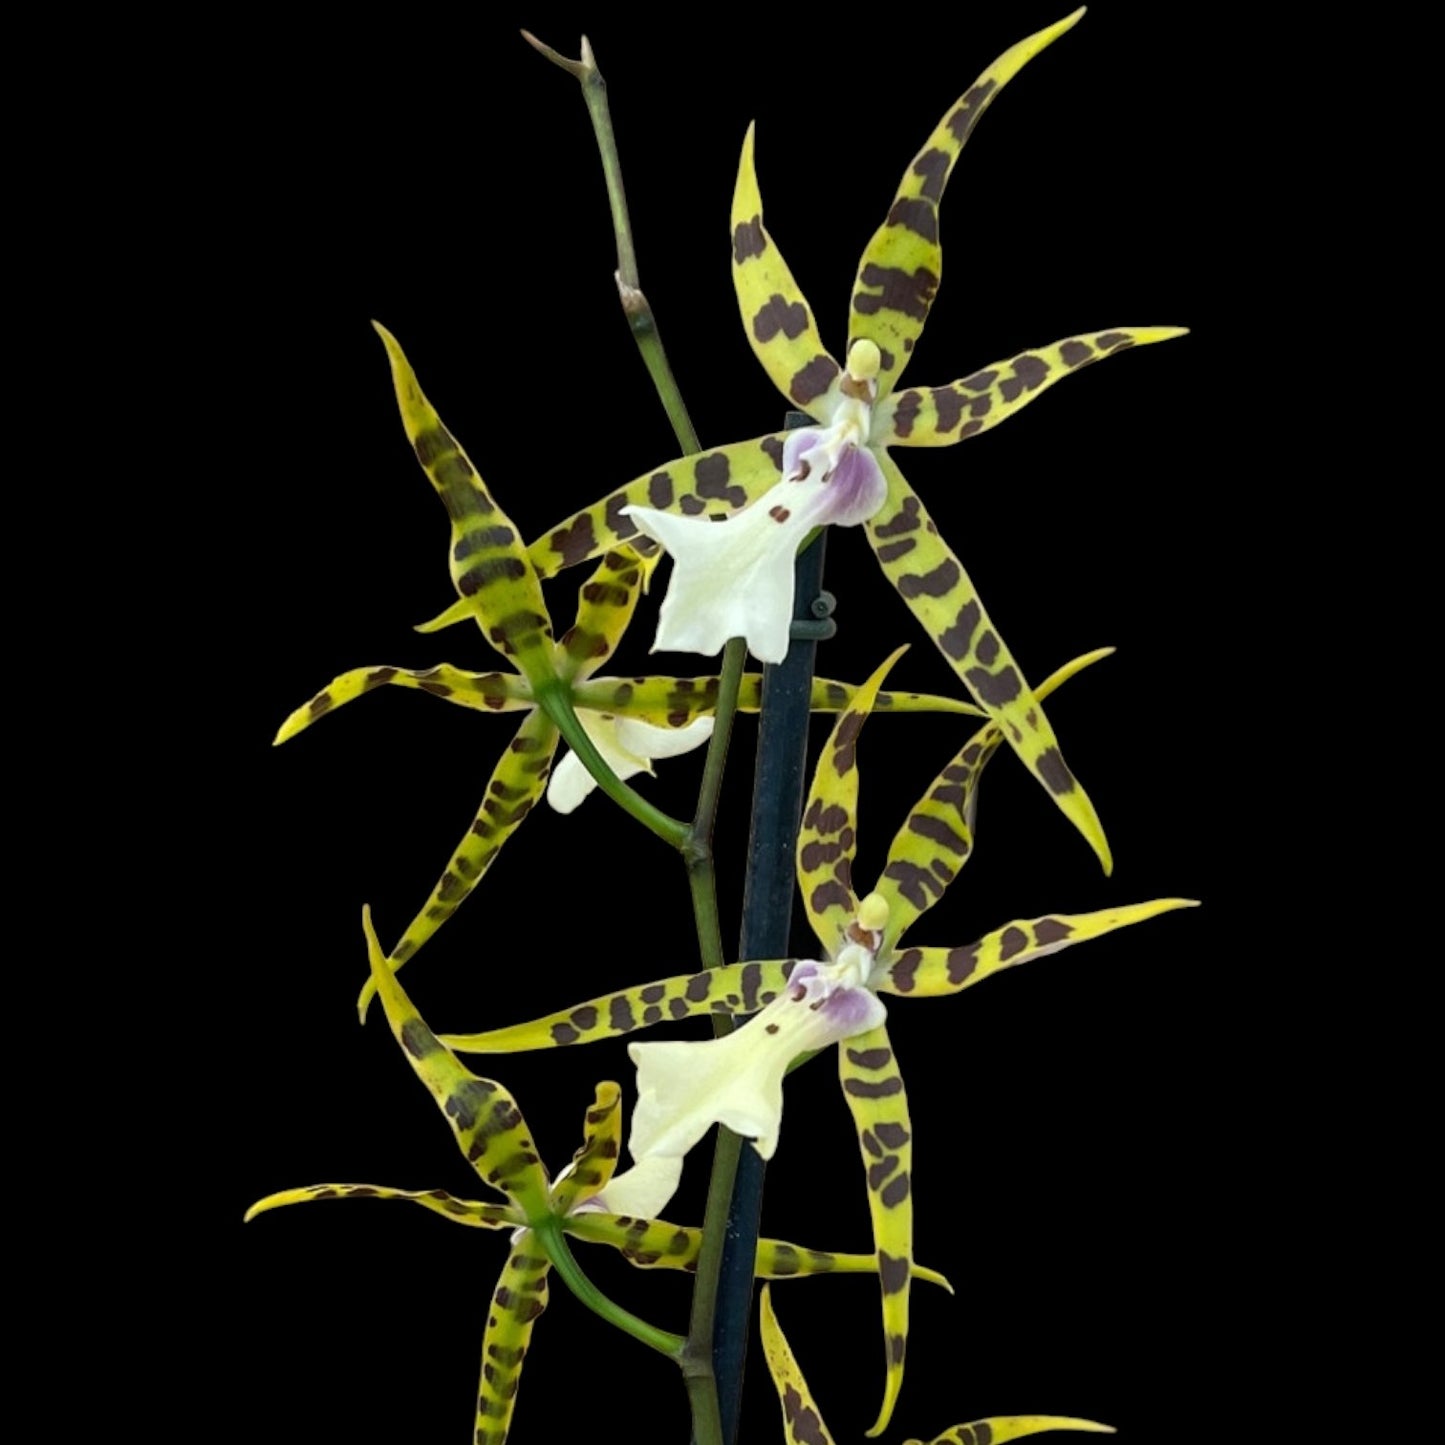 Mtssa. Golden Spider 'Copius' - Dr. Bill's Orchids, LLC